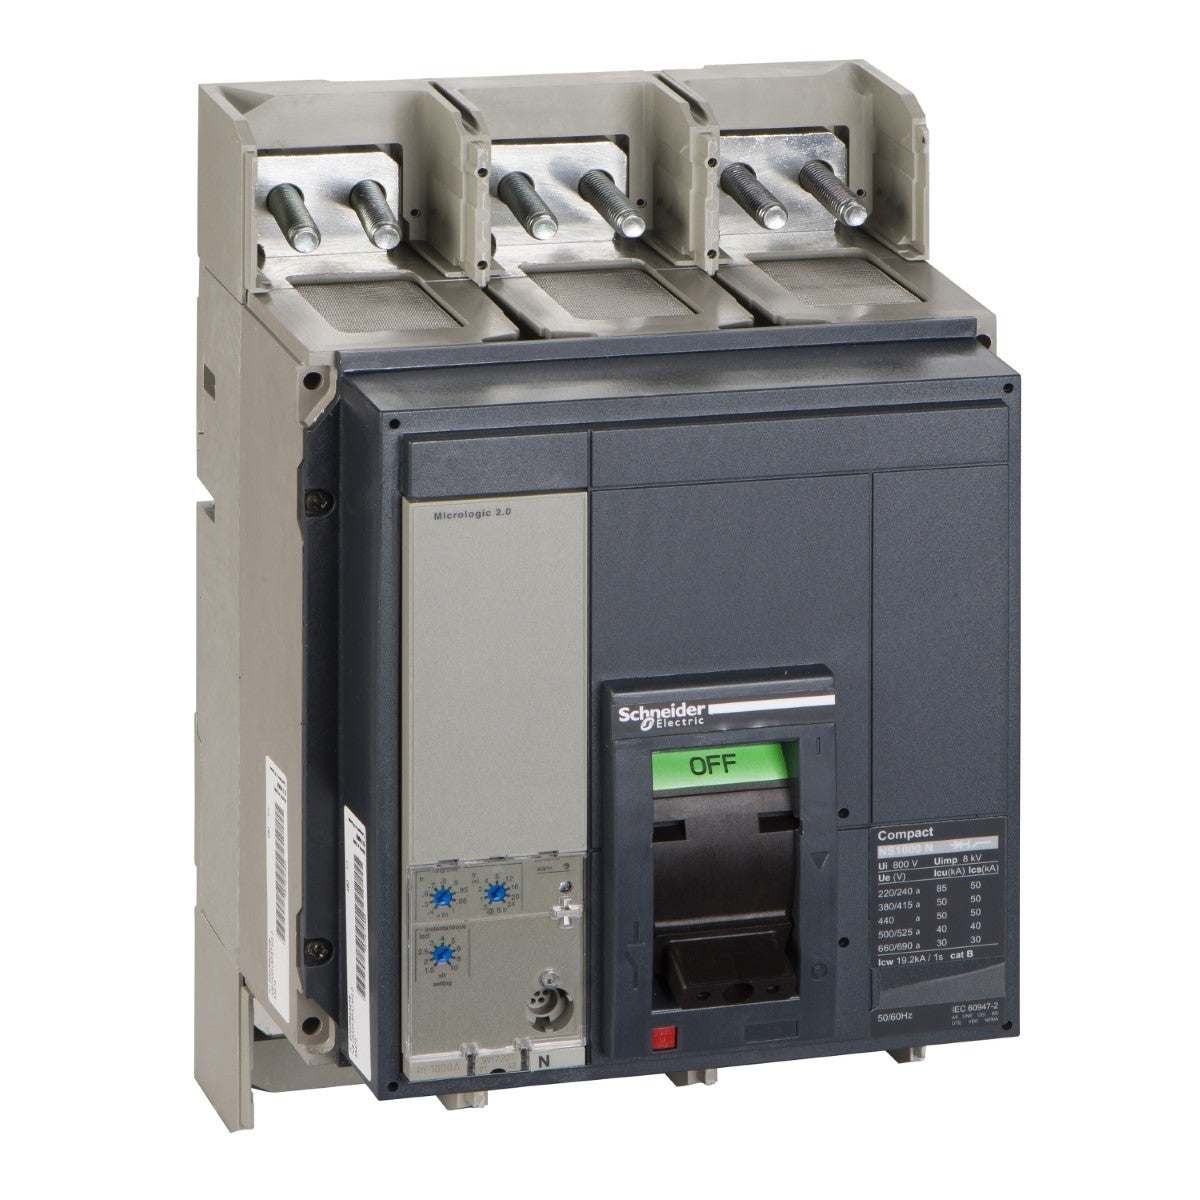 circuit breaker Compact NS1000N - Micrologic 2.0 - 1000 A - 3 poles 3t